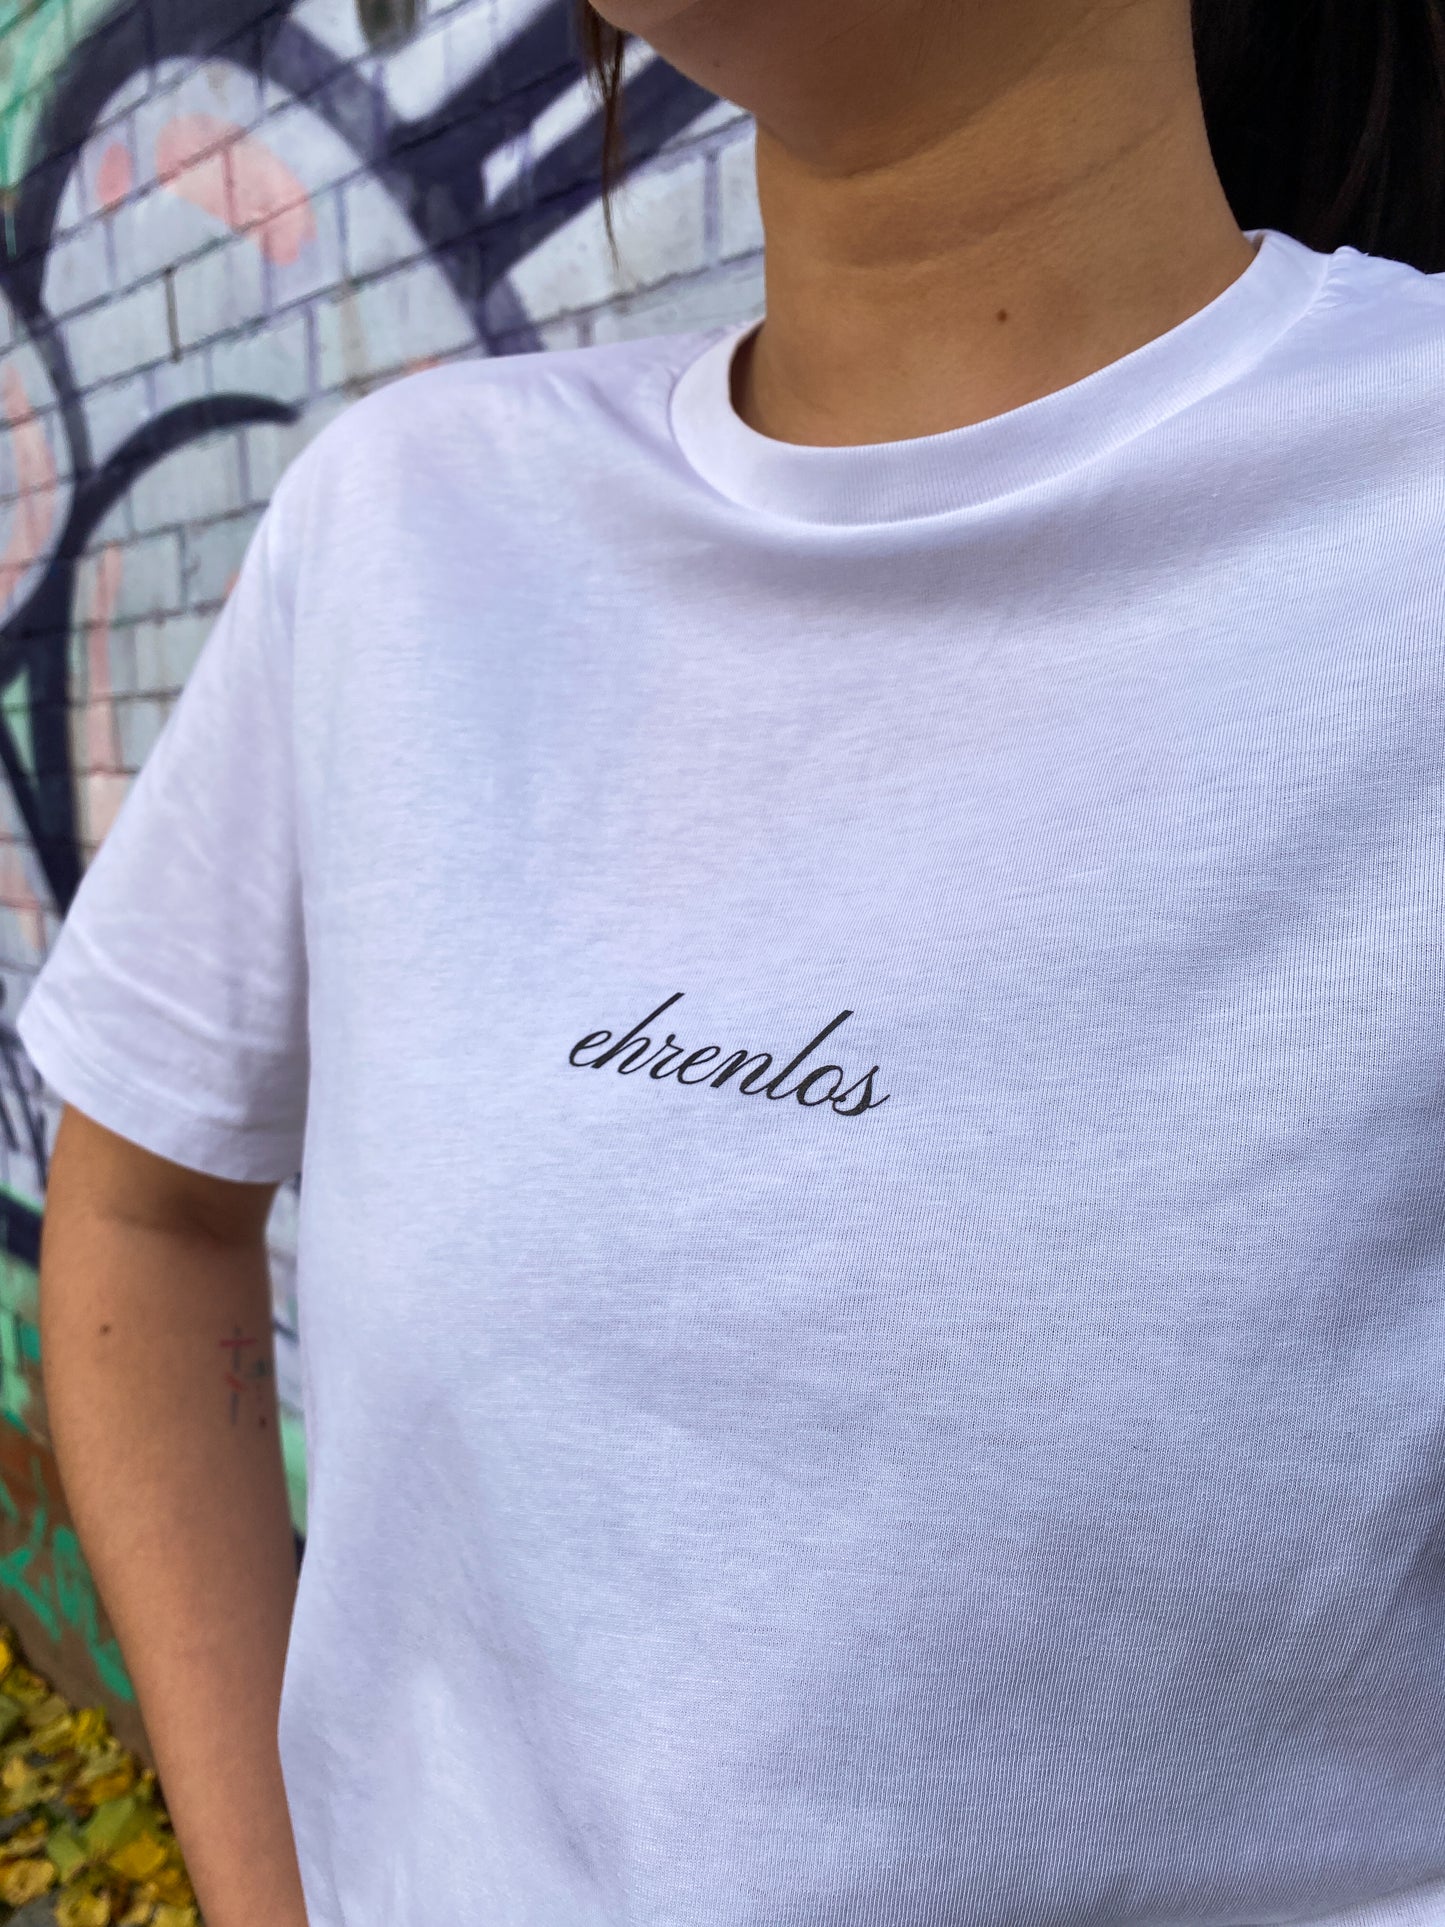 Ehrenlos T-Shirt